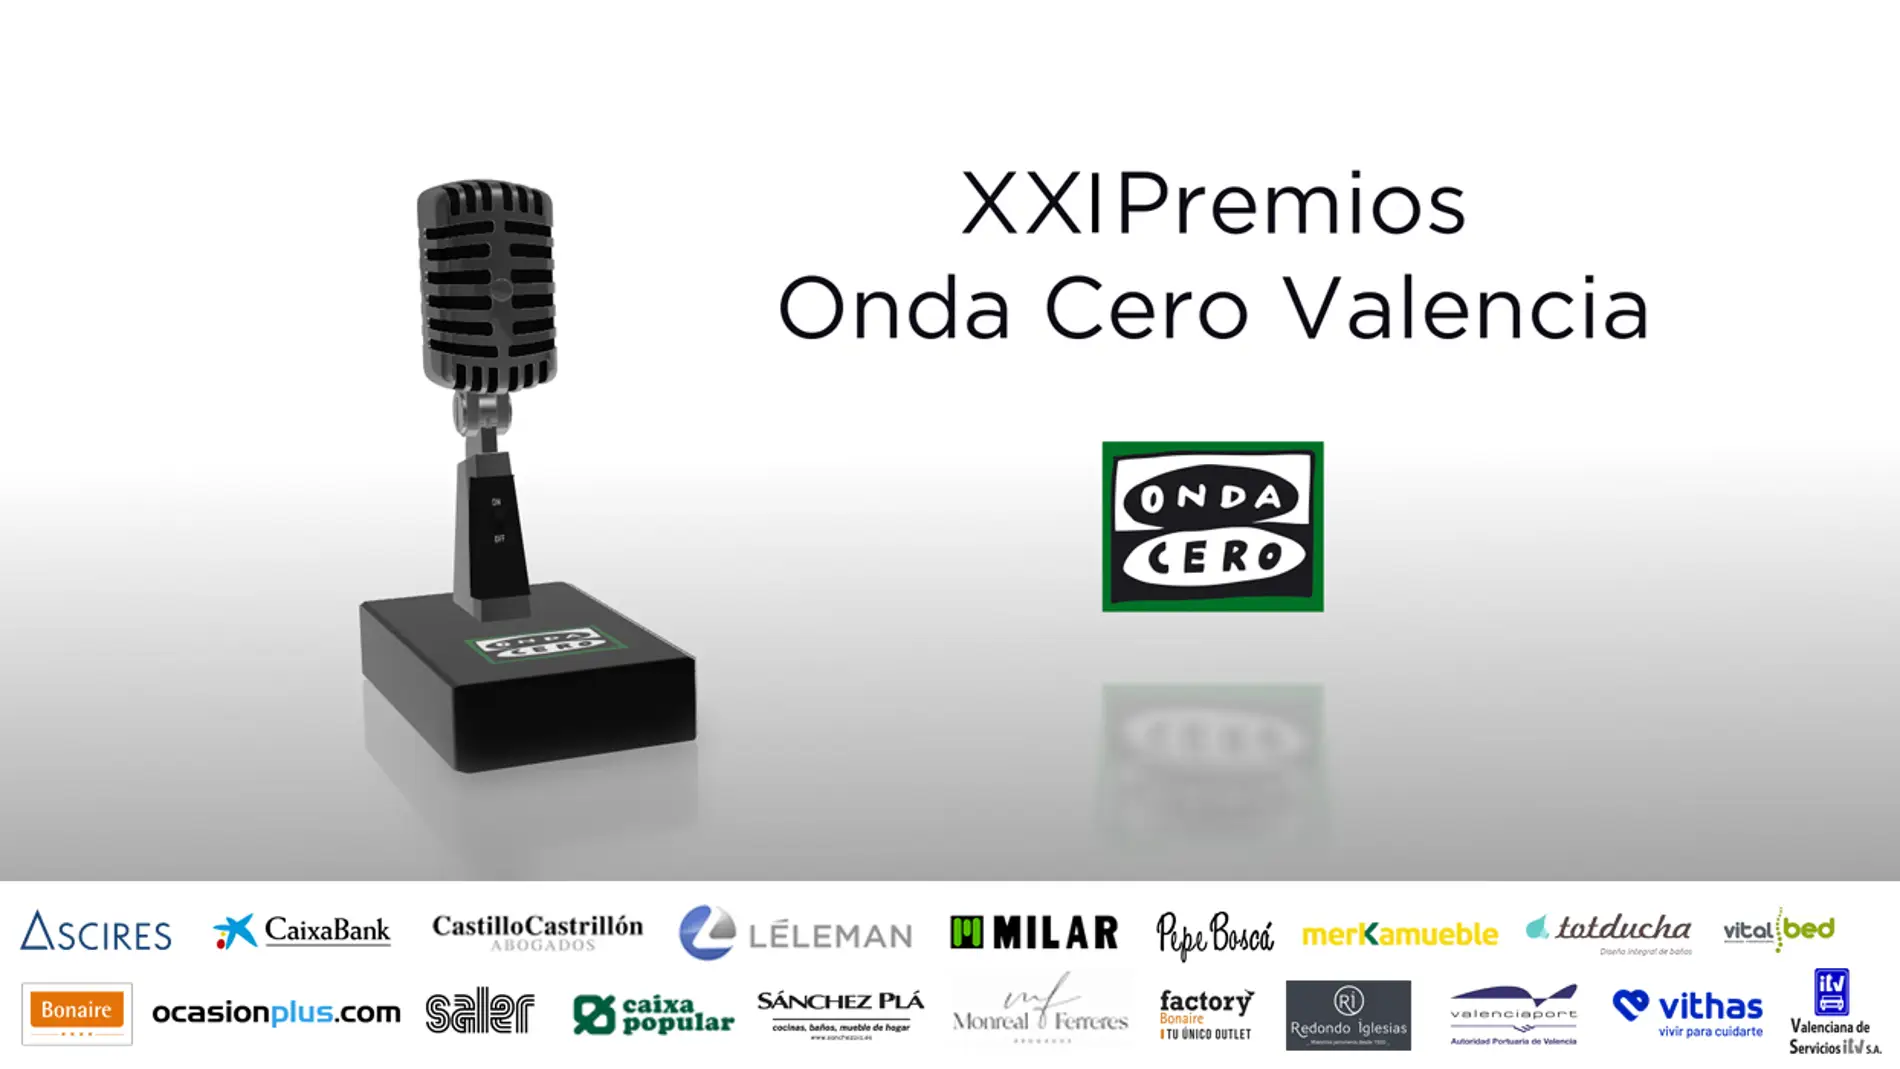 XXI Premios Onda Cero Valencia